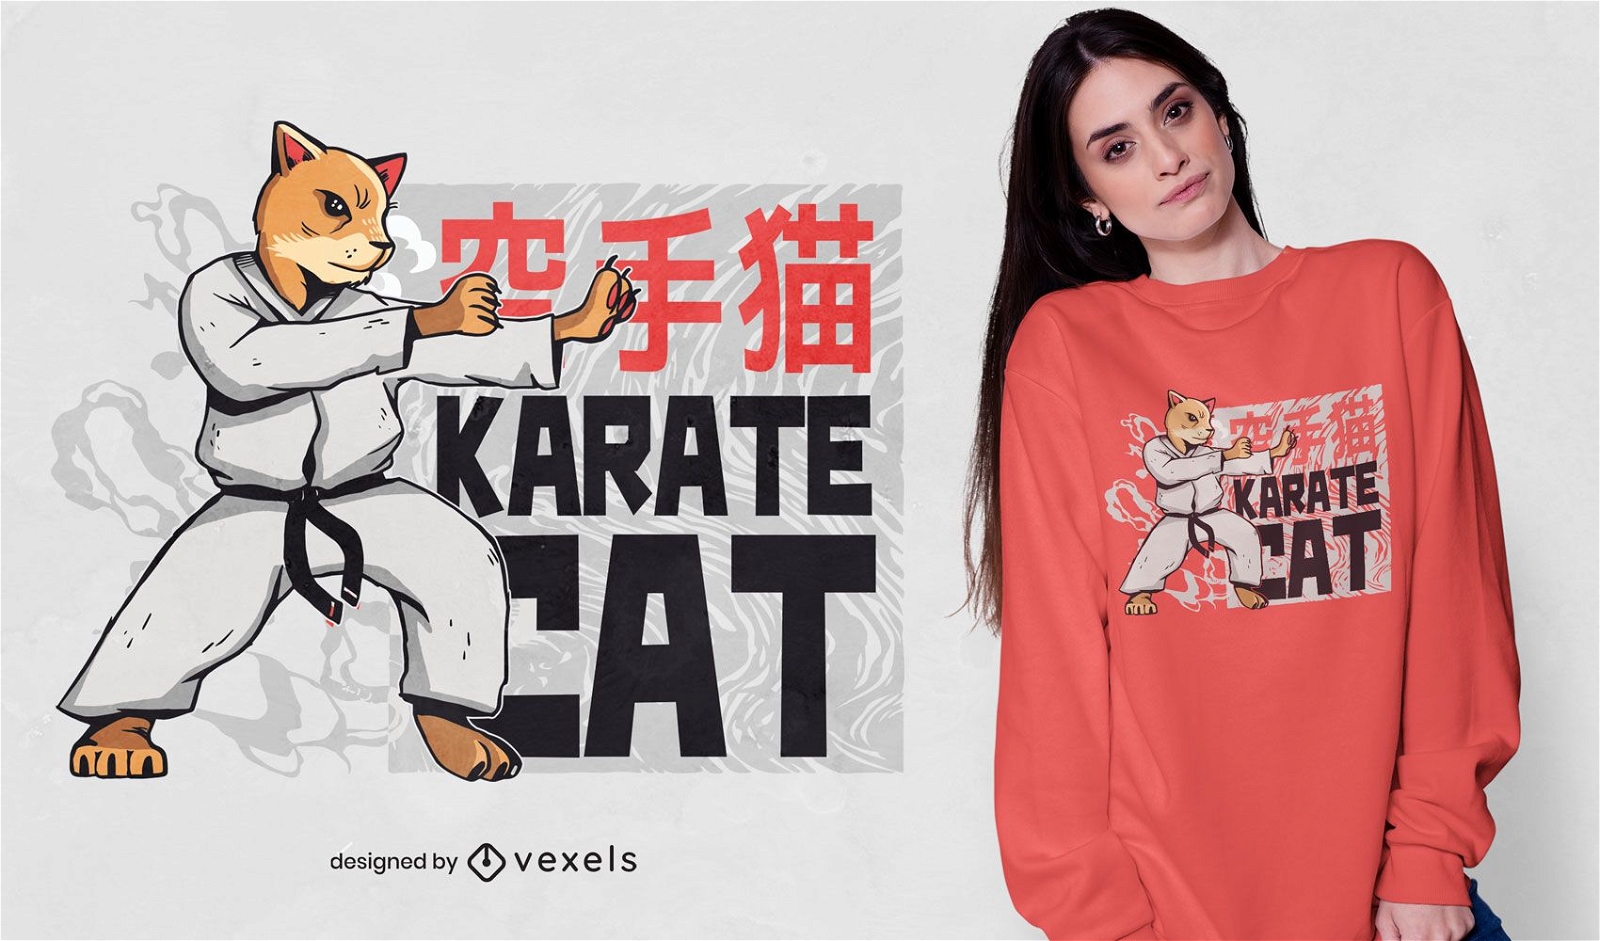 Karate cat t-shirt design